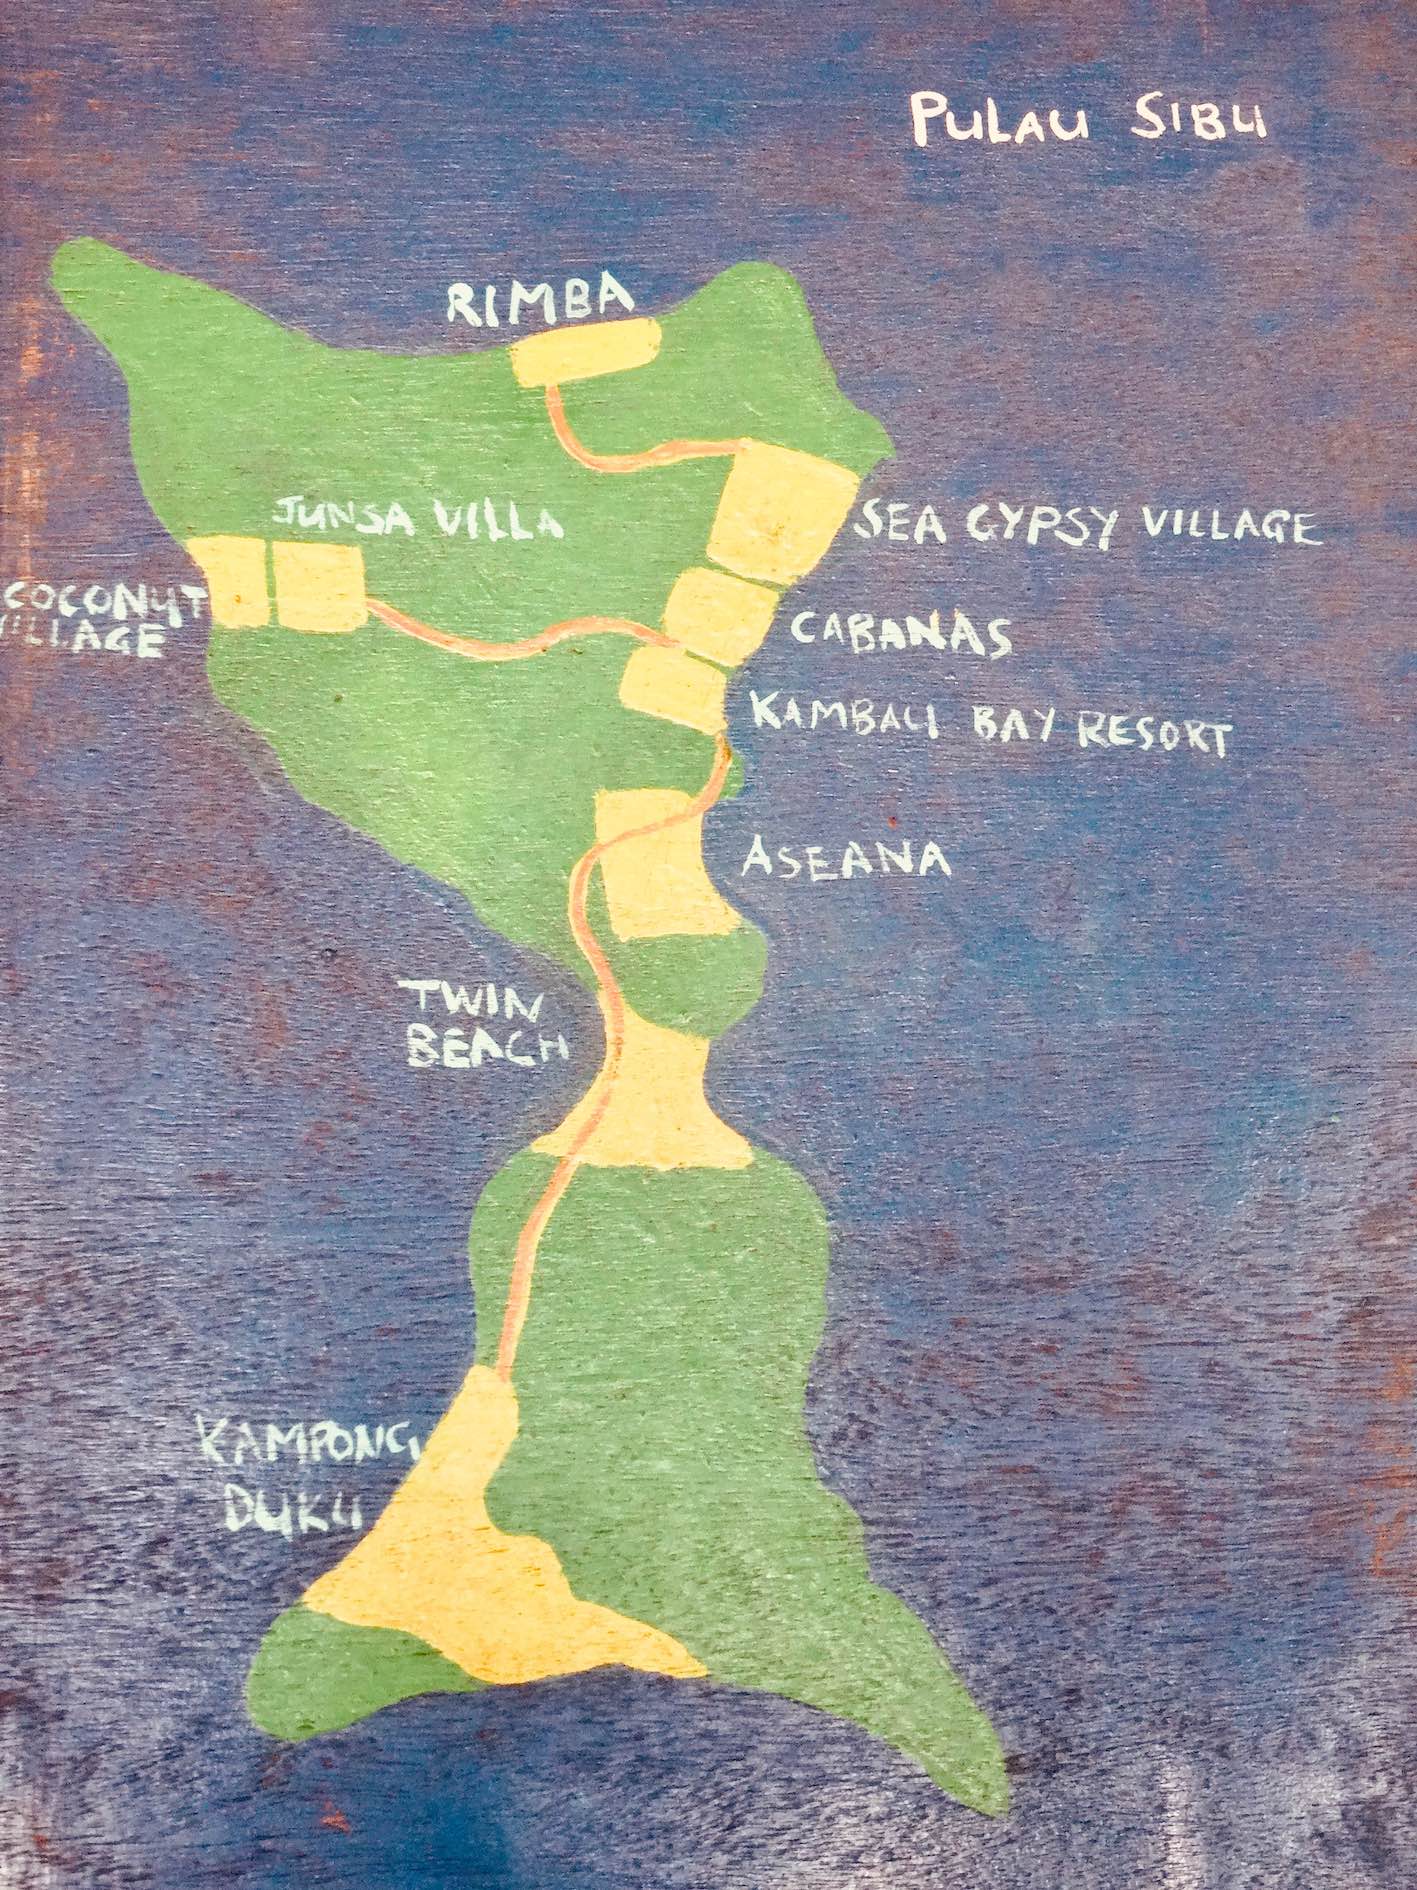 Map of Pulau Sibu Malaysia.